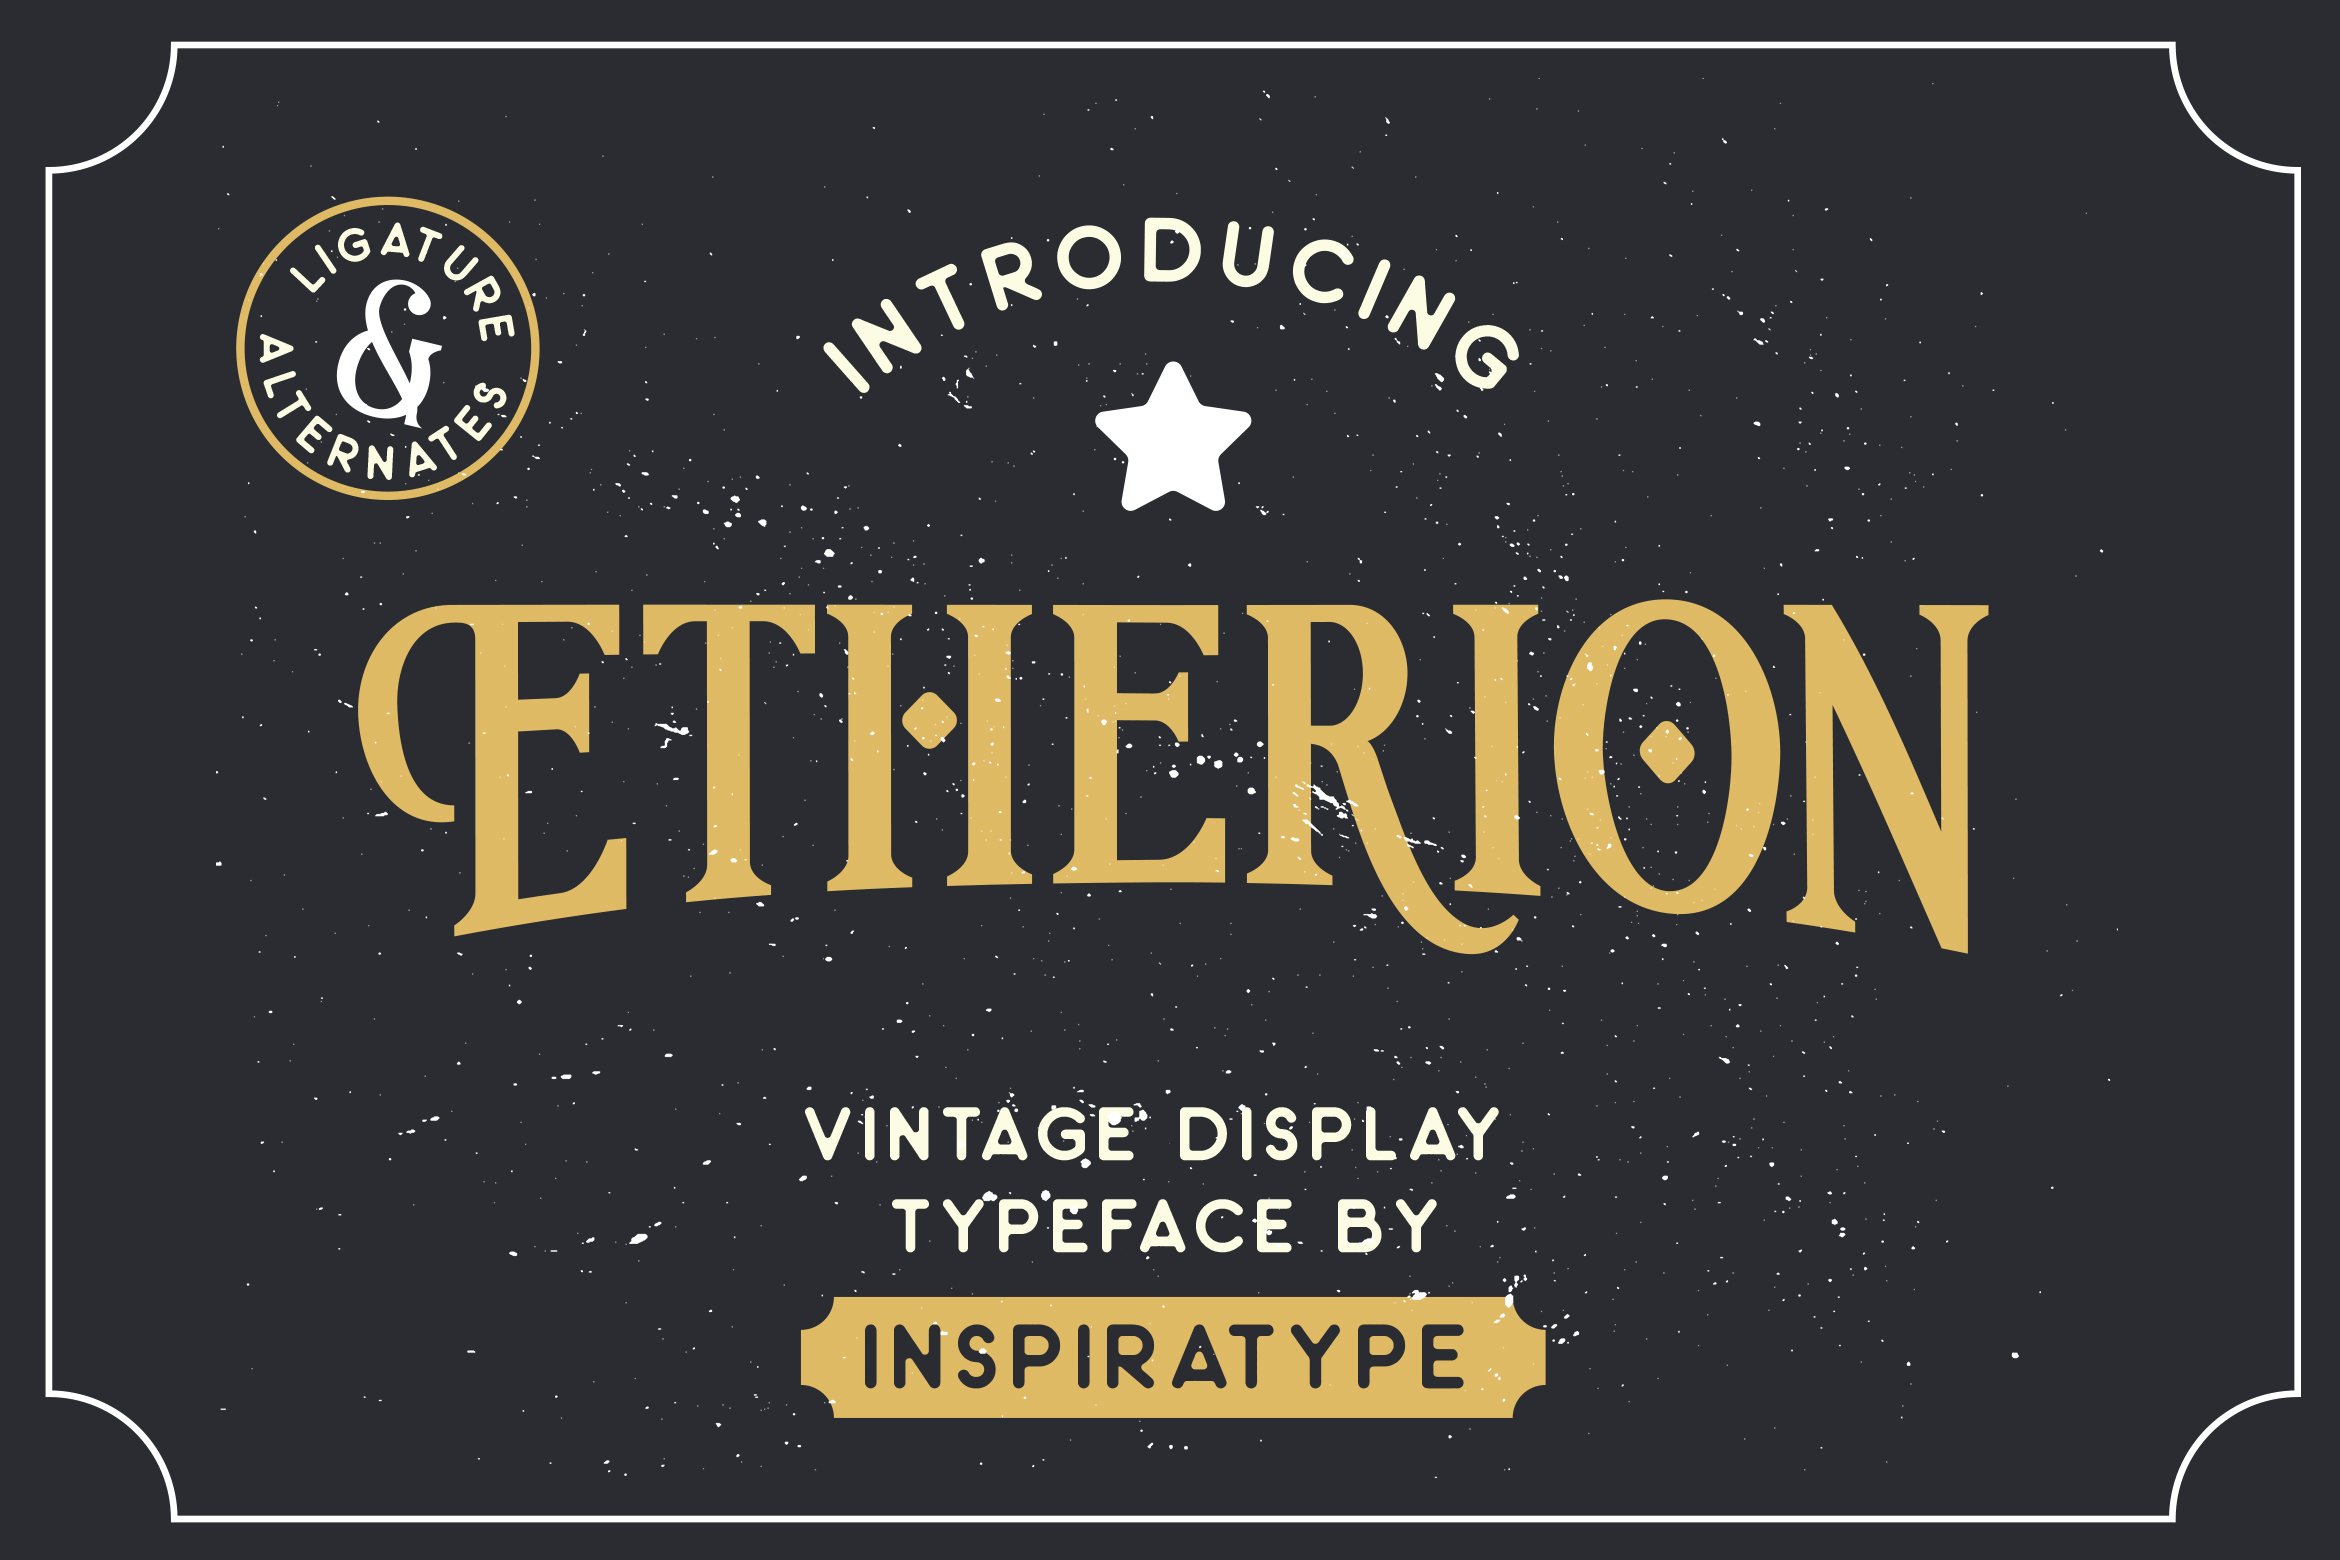 Etherion - Vintage Display cover image.